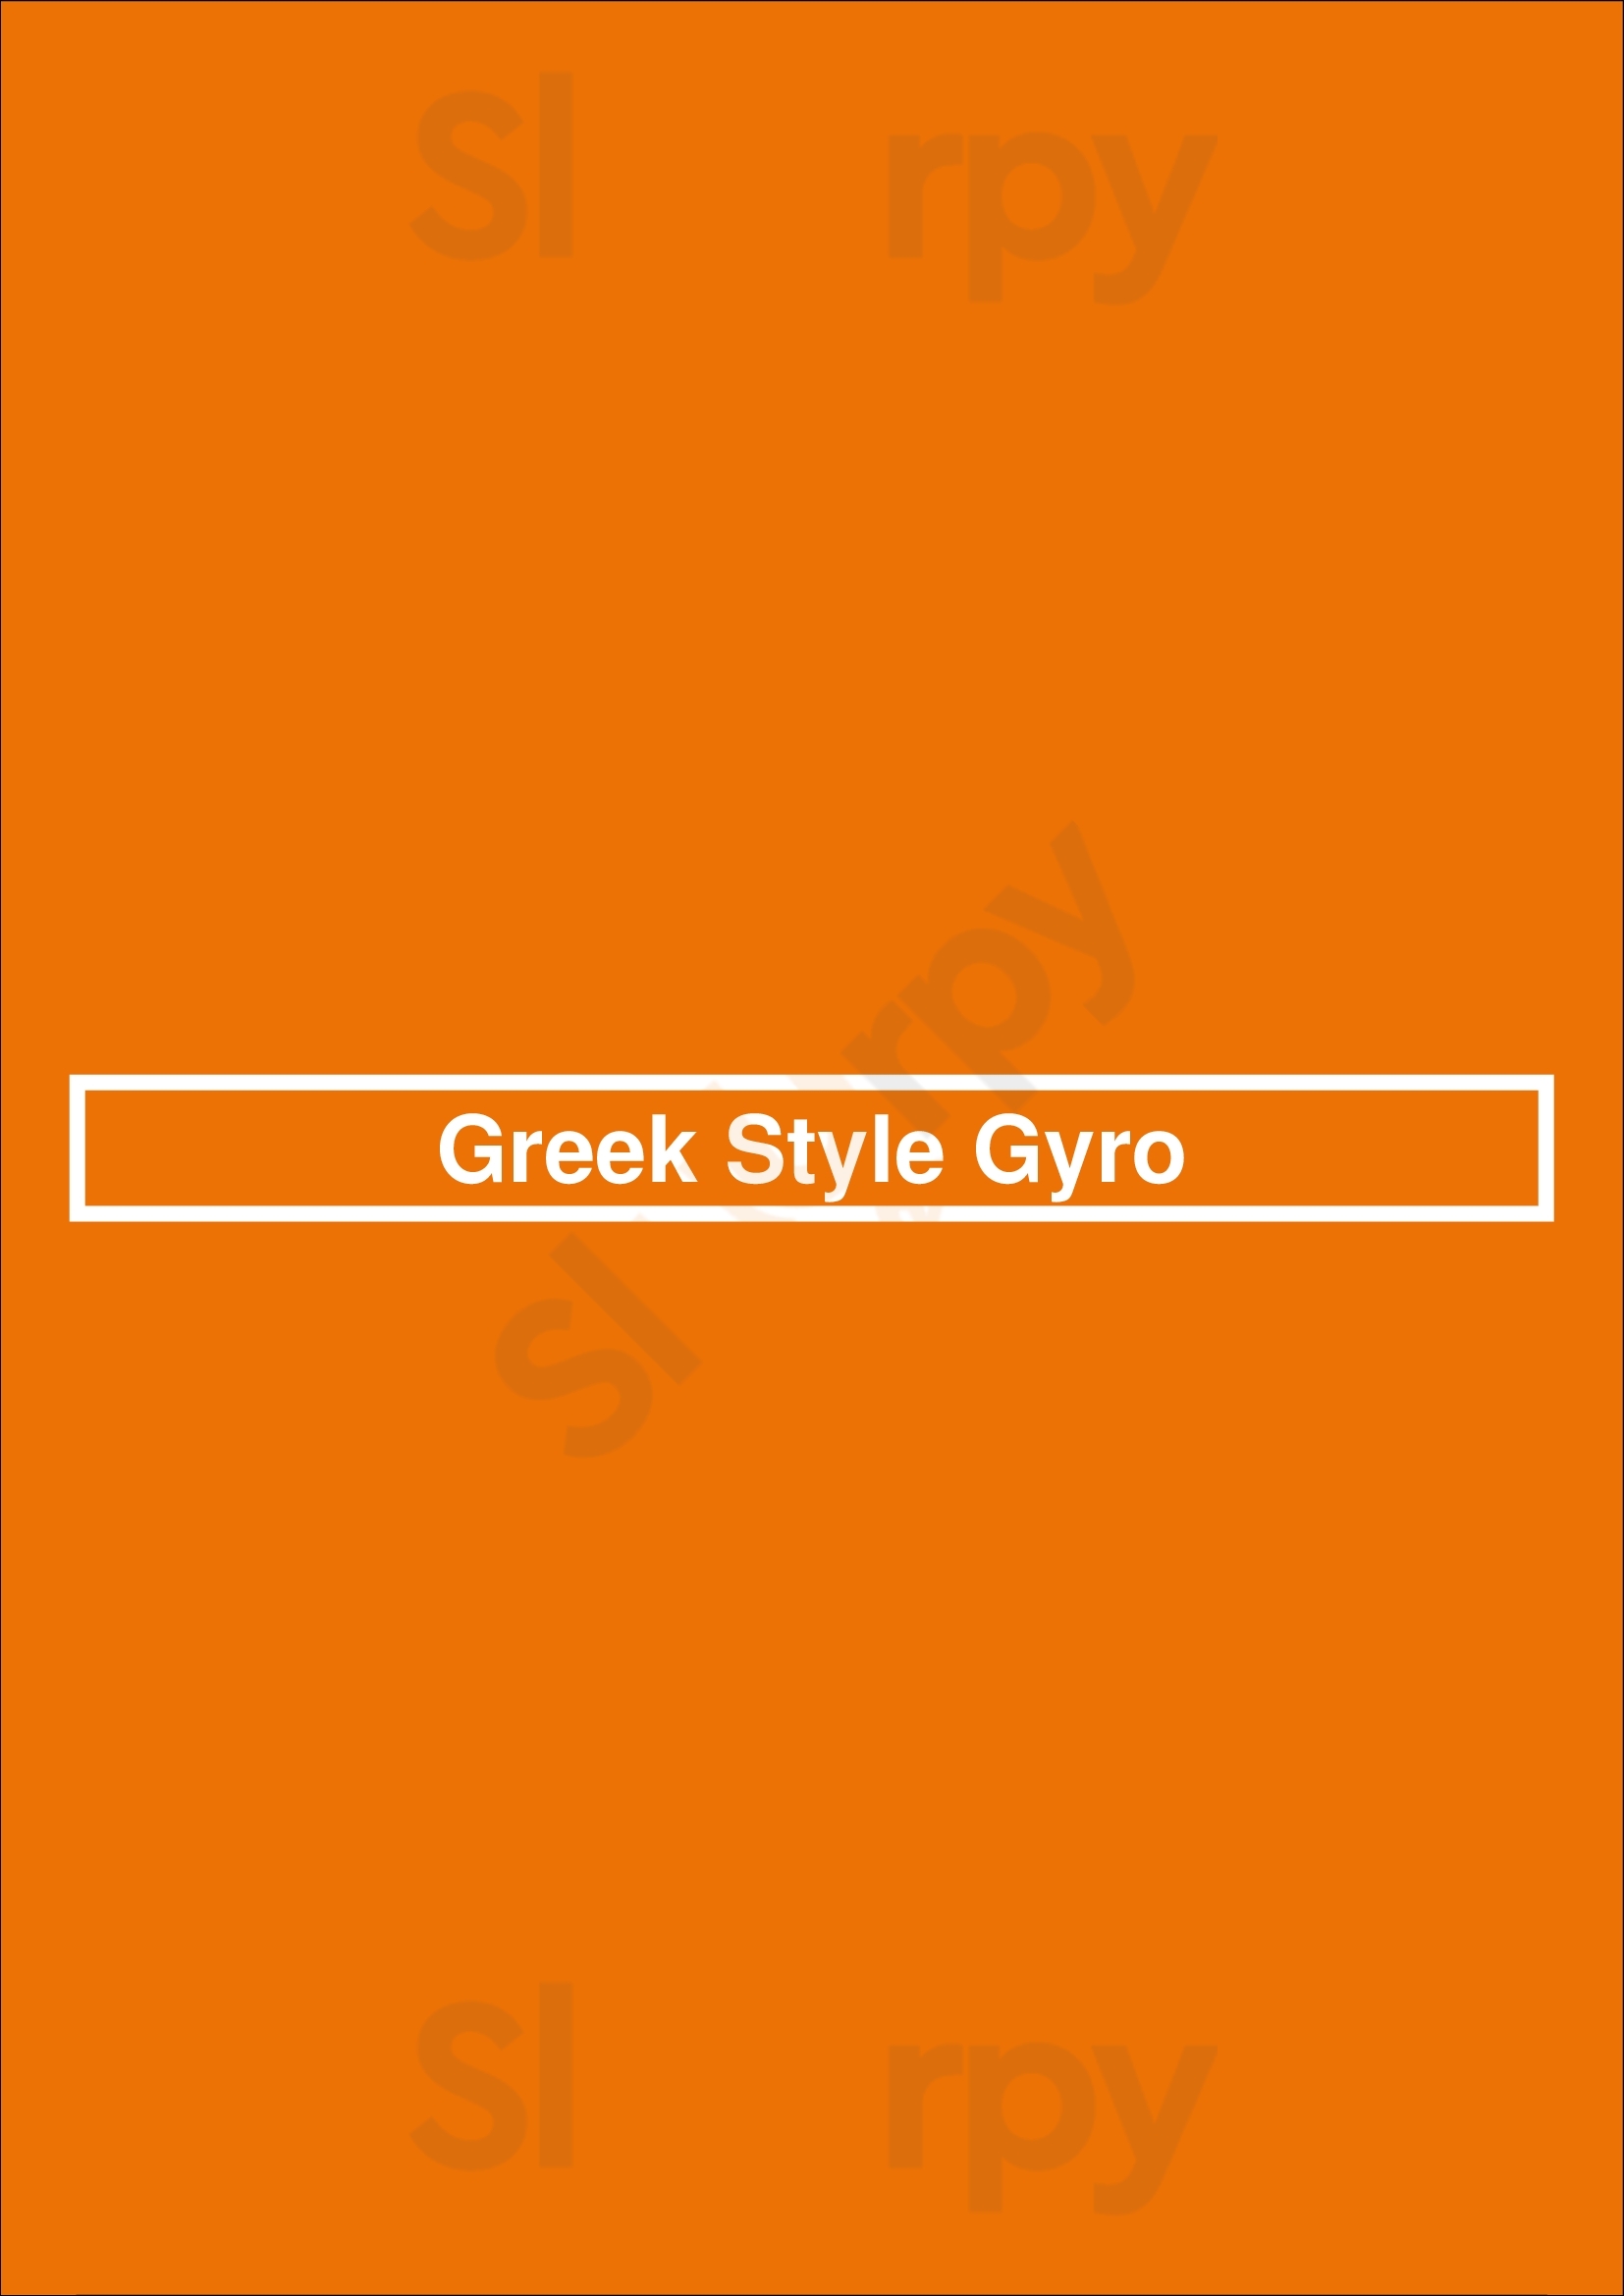 Greek Style Gyro Nashville Menu - 1